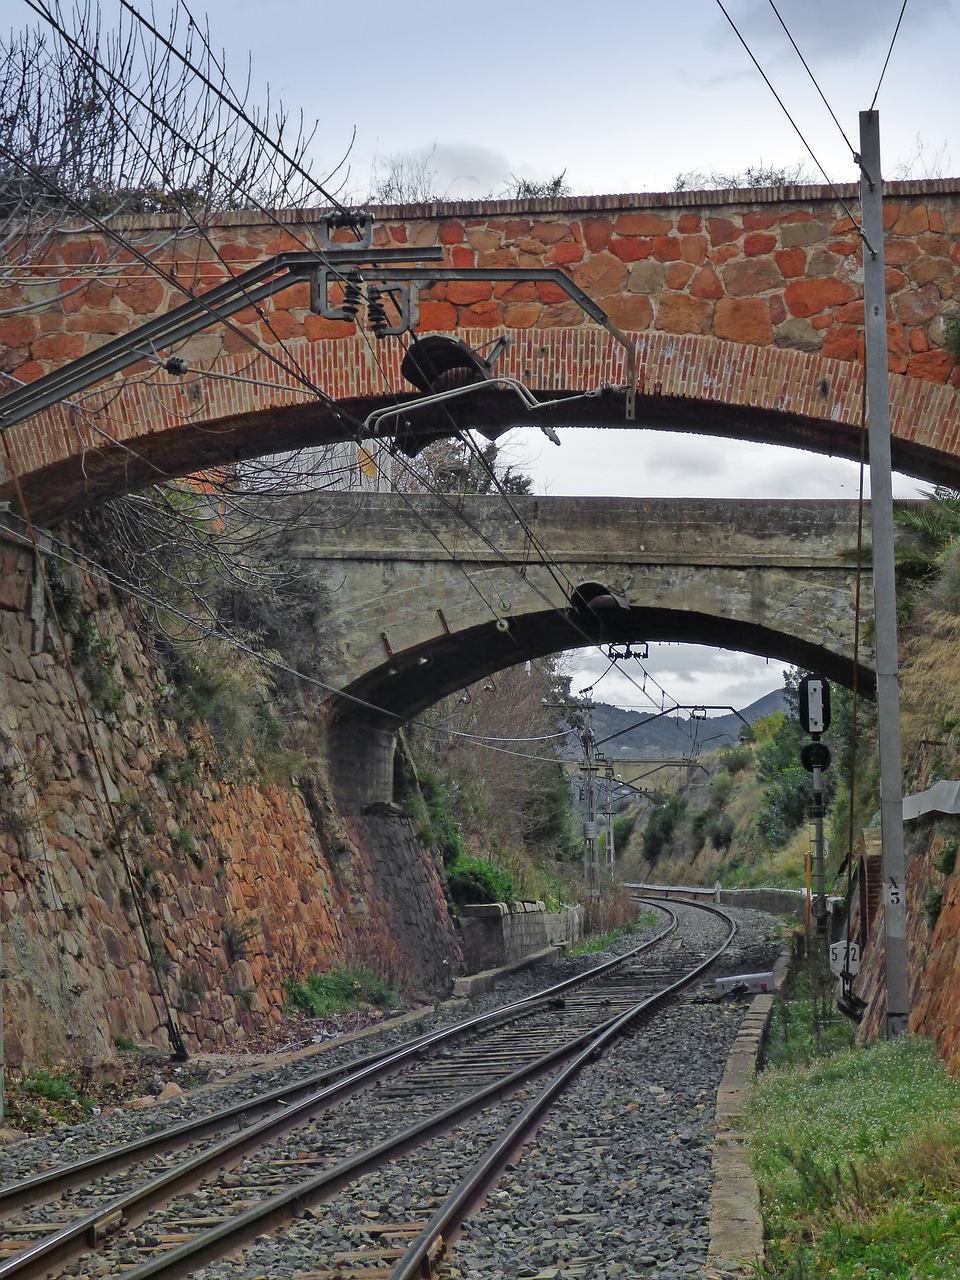 via railway line engineering free photo